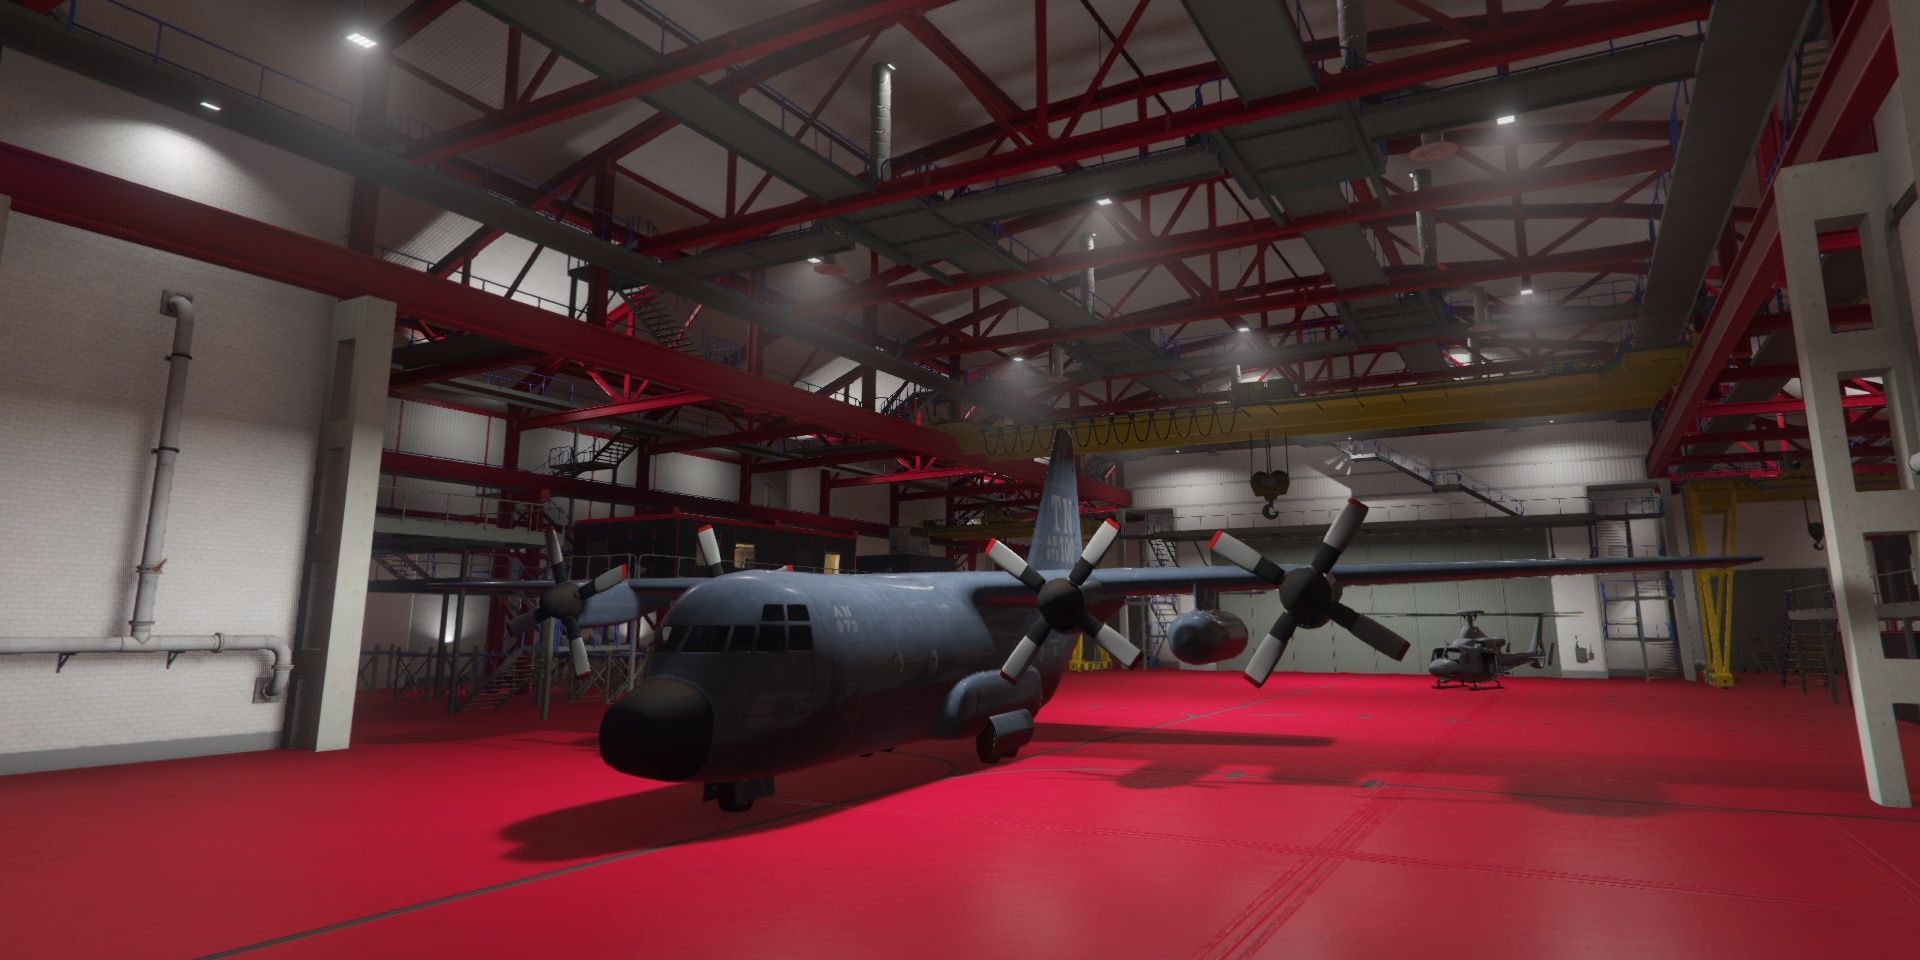 A hangar in GTA Online